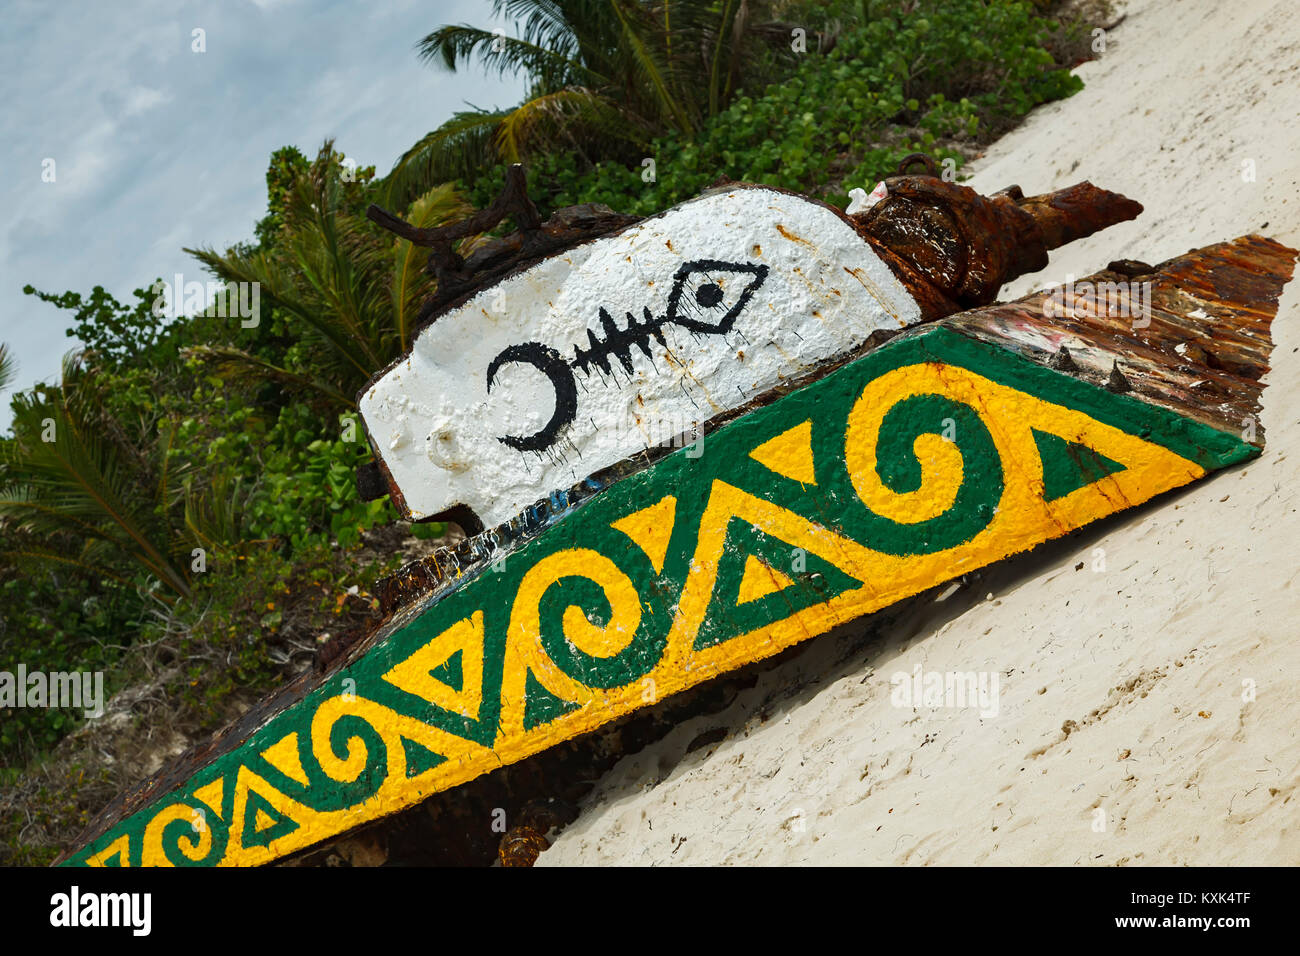 Abandoned tank, Flamenco Beach, Culebra, Puerto Rico Stock Photo